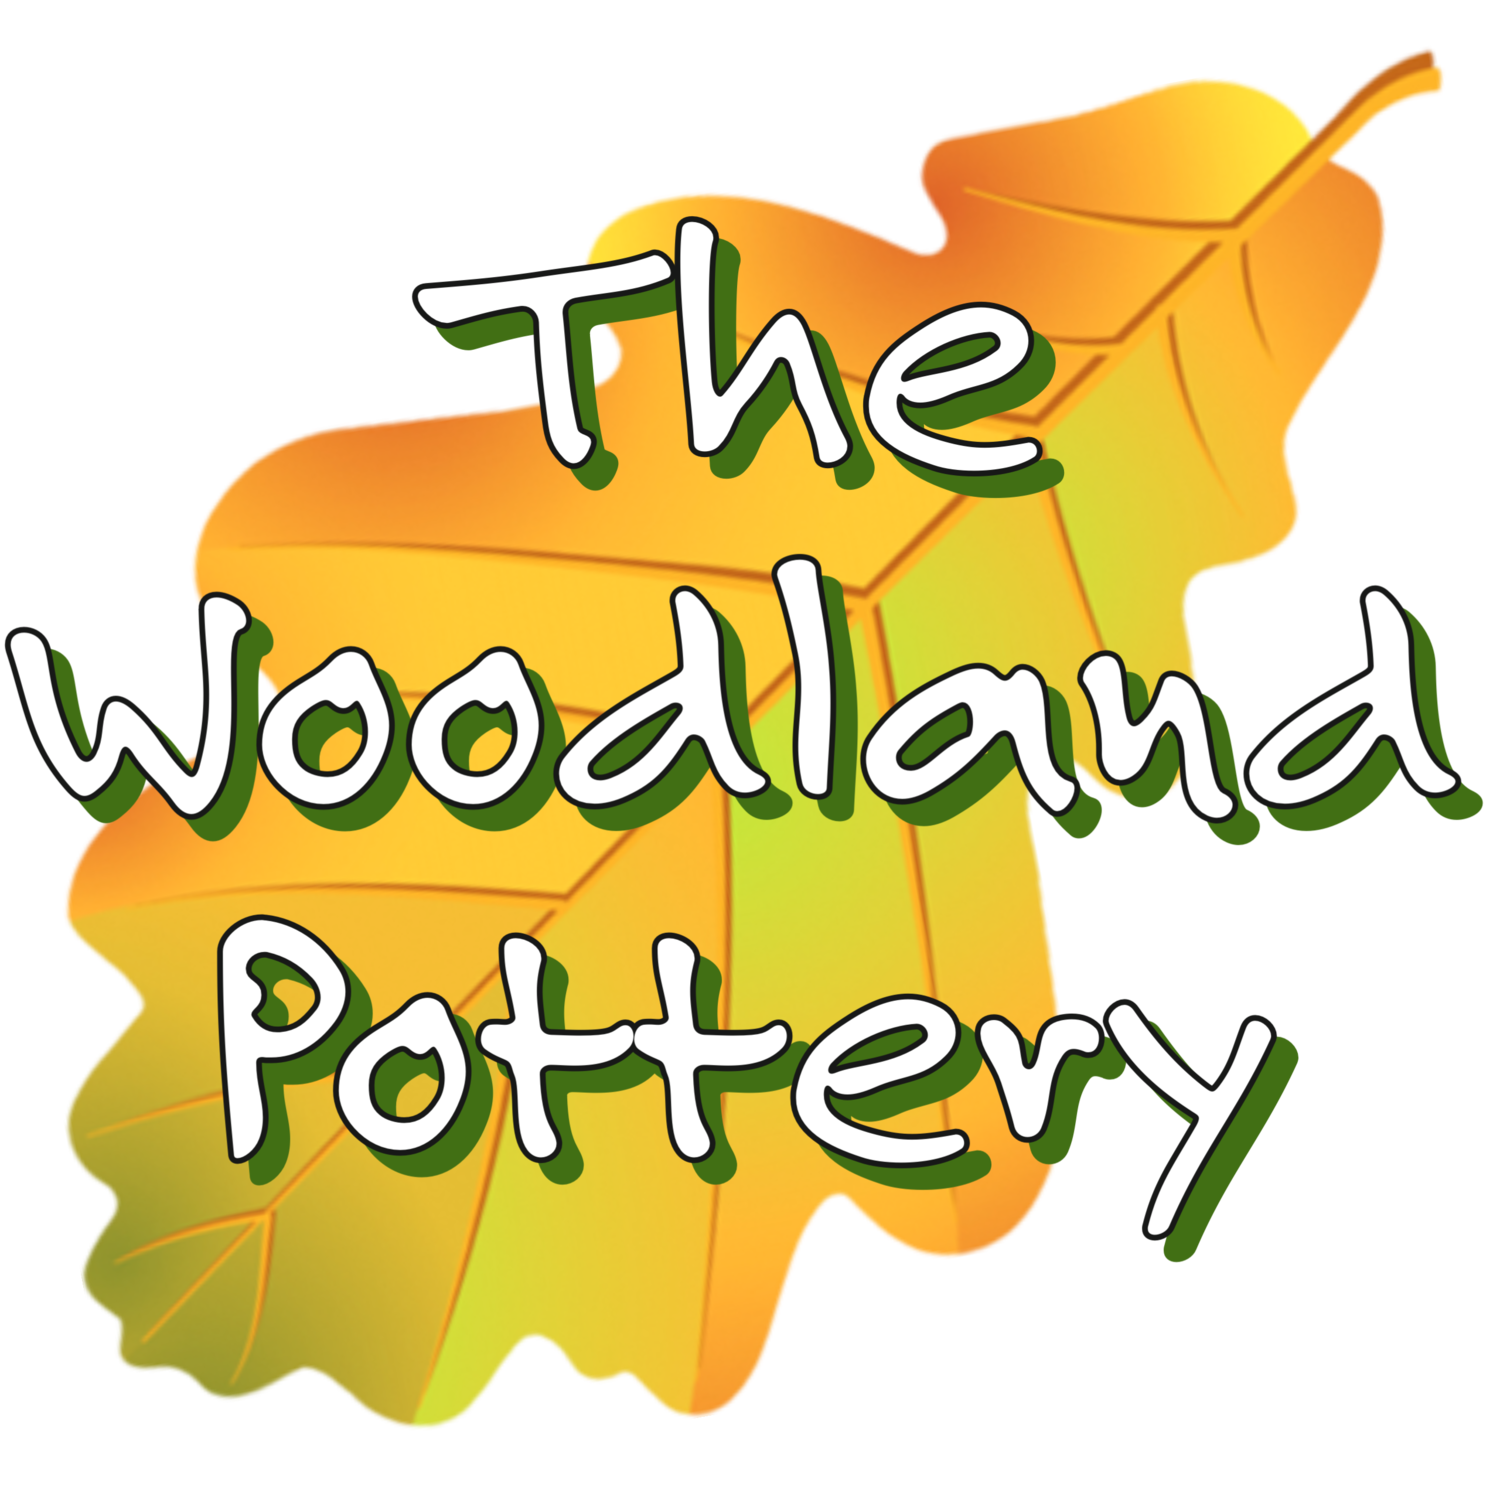 Woodland Pottery